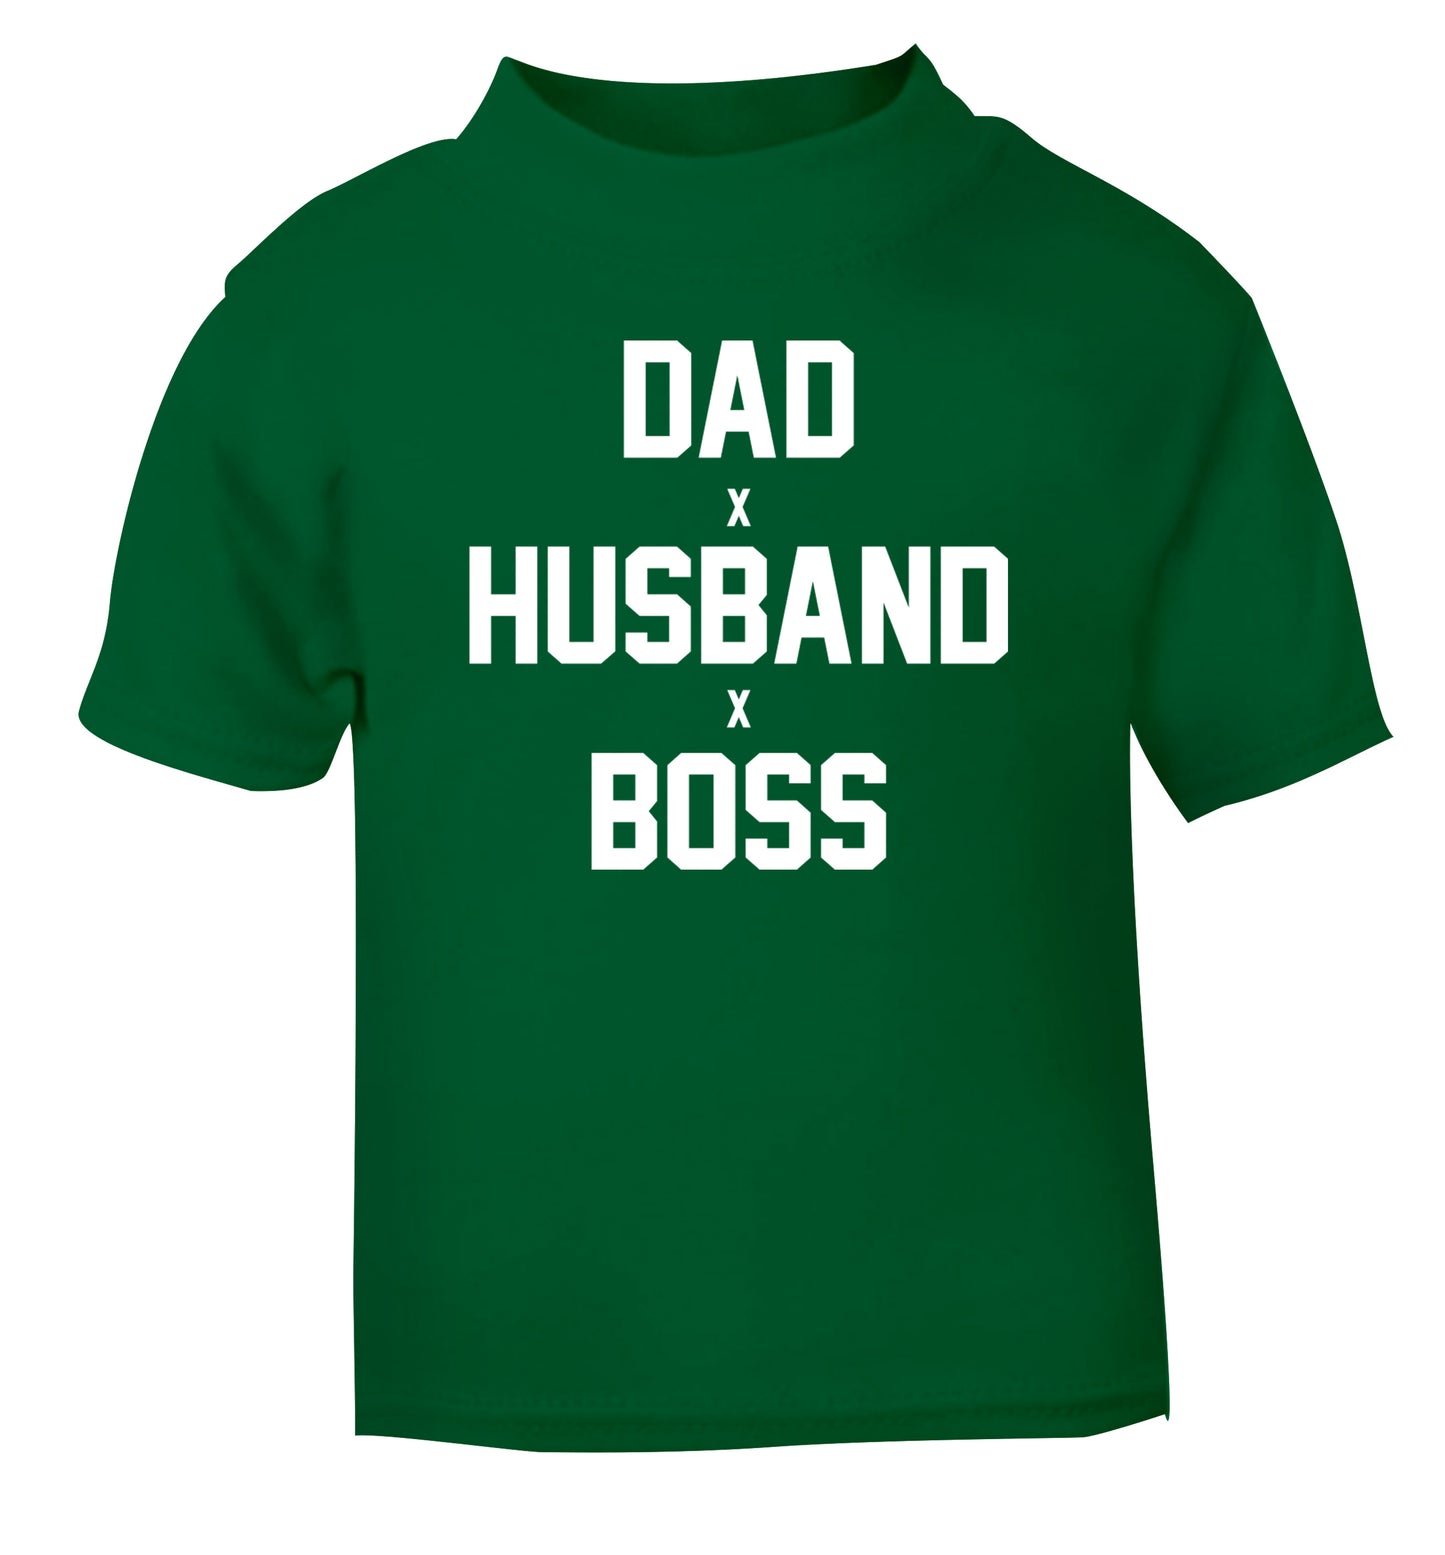 Dad husband boss green Baby Toddler Tshirt 2 Years